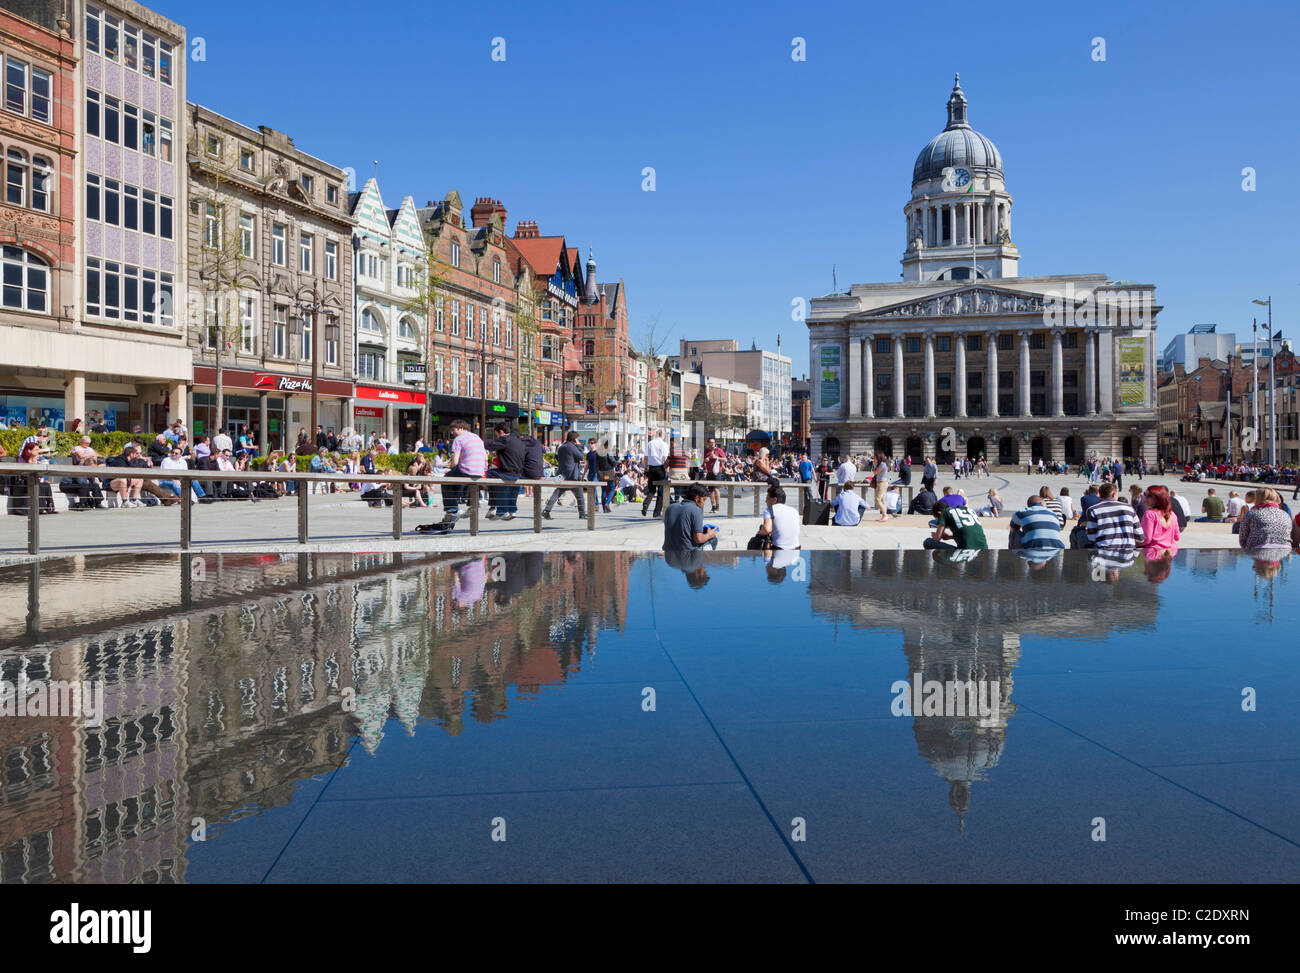 The council house and  Old market square fountain Nottingham Nottinghamshire England GB UK EU Europe Stock Photo